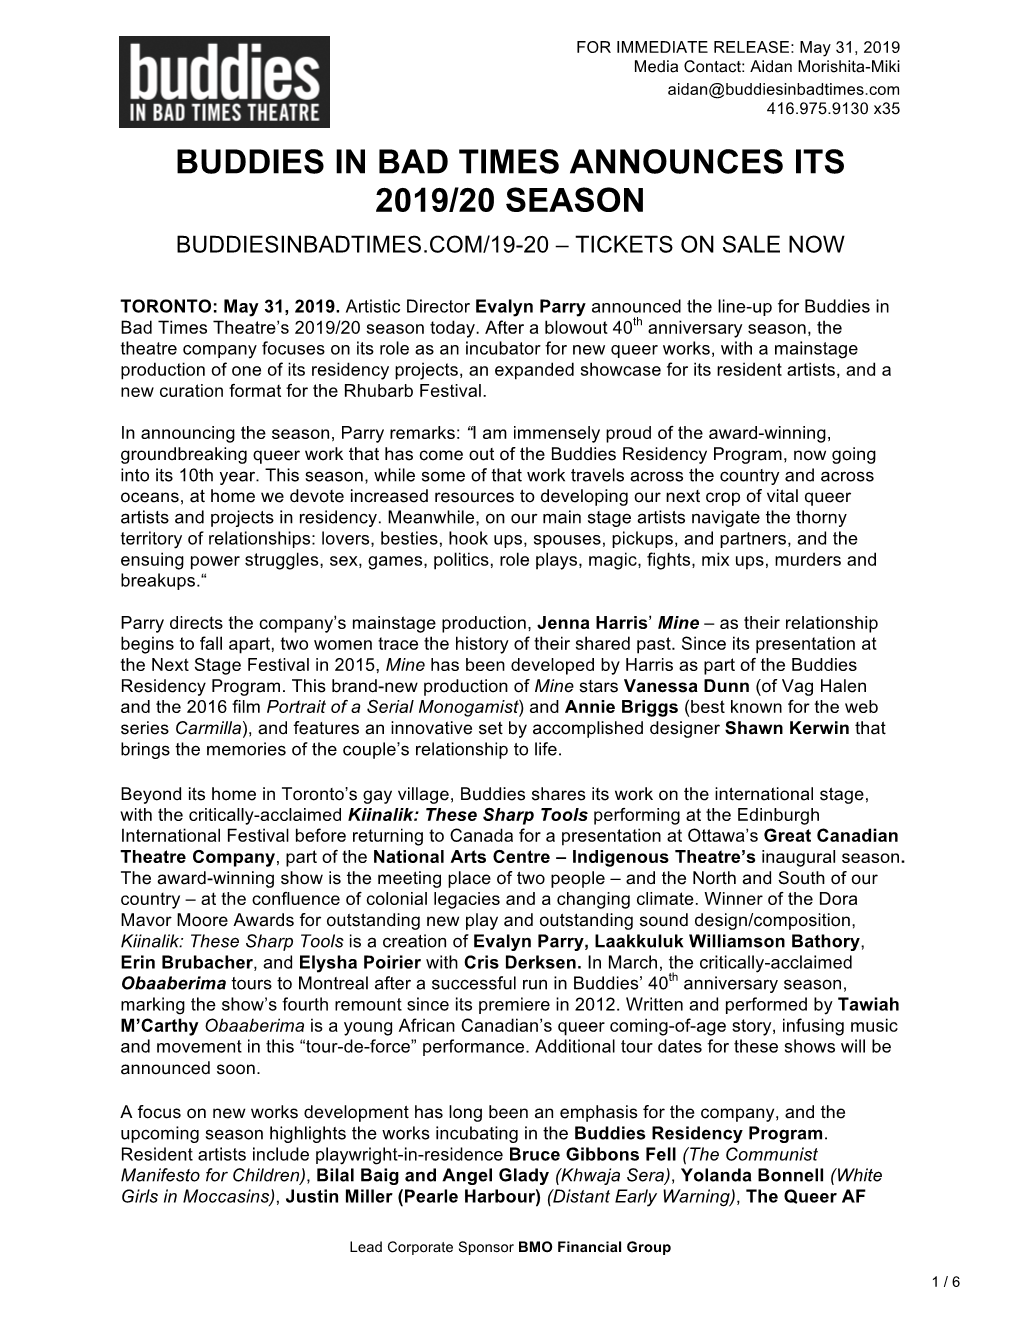 Buddies in Bad Times Announces Its 2019/20 Season